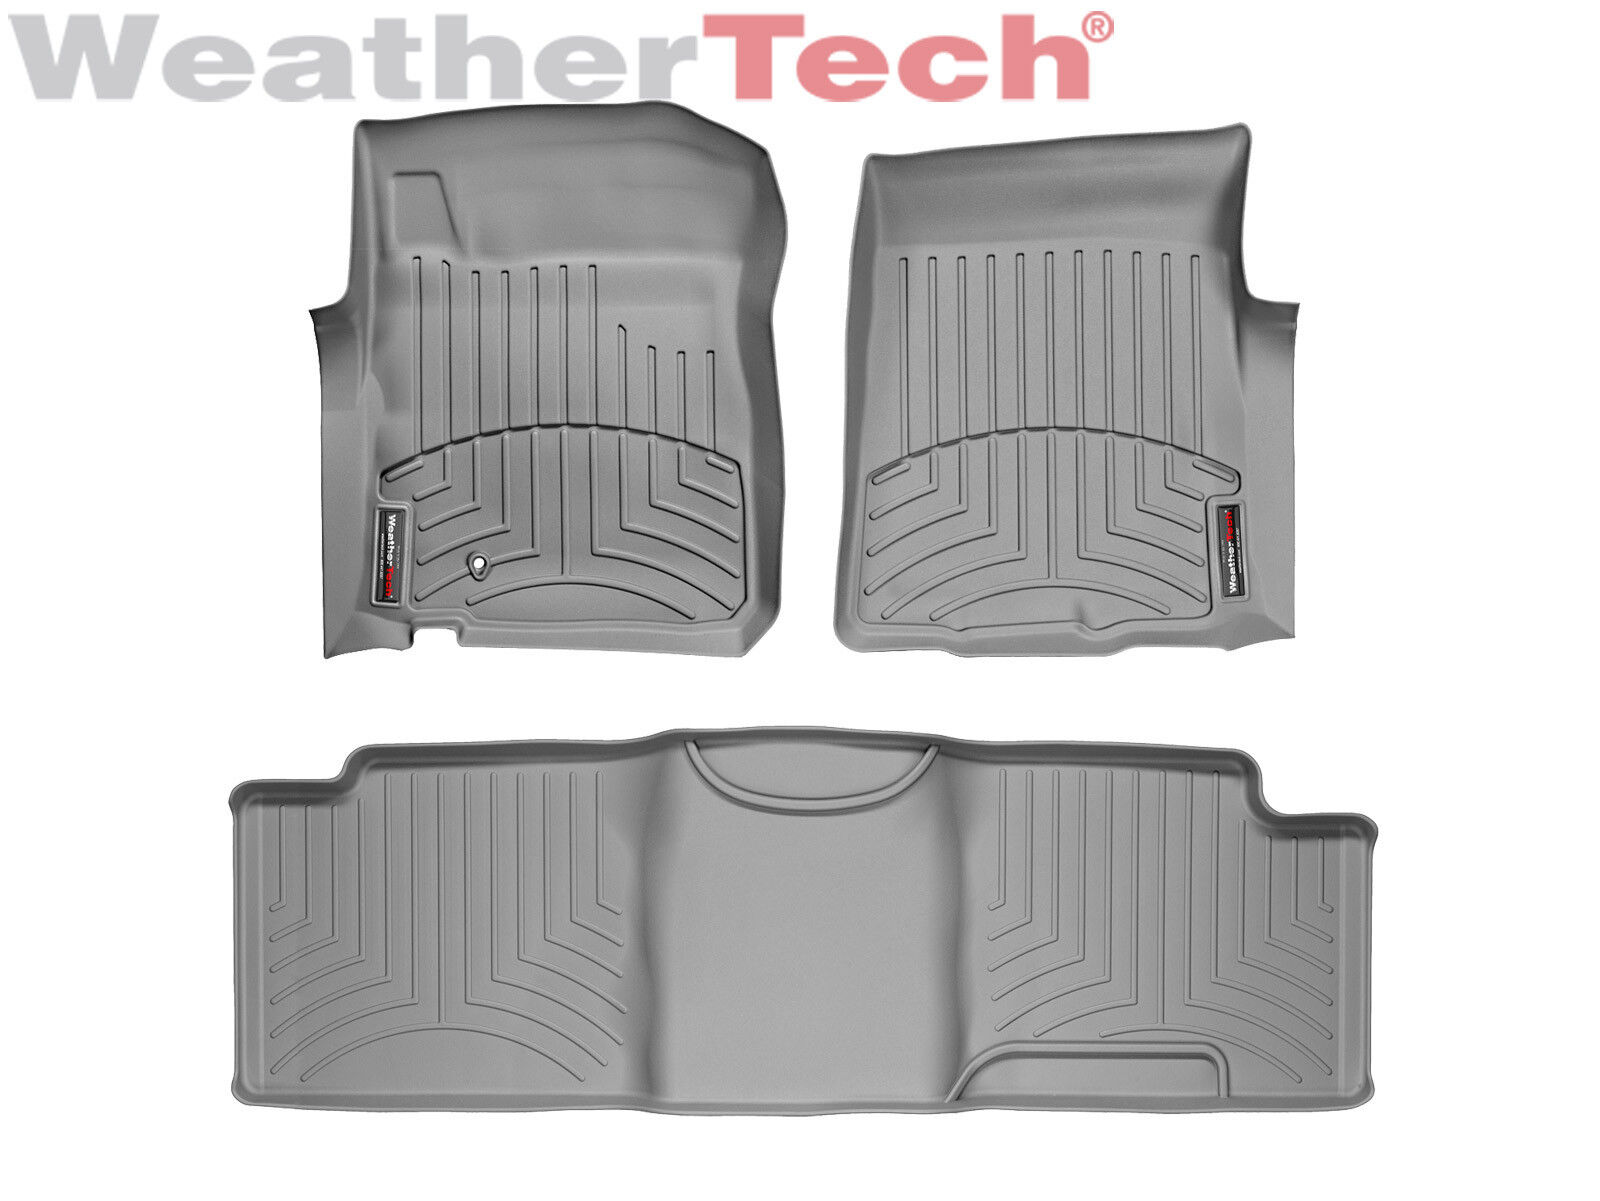 WeatherTech DigitalFit FloorLiner for Ford F-150 SuperCab - 1st/2nd Row - Grey